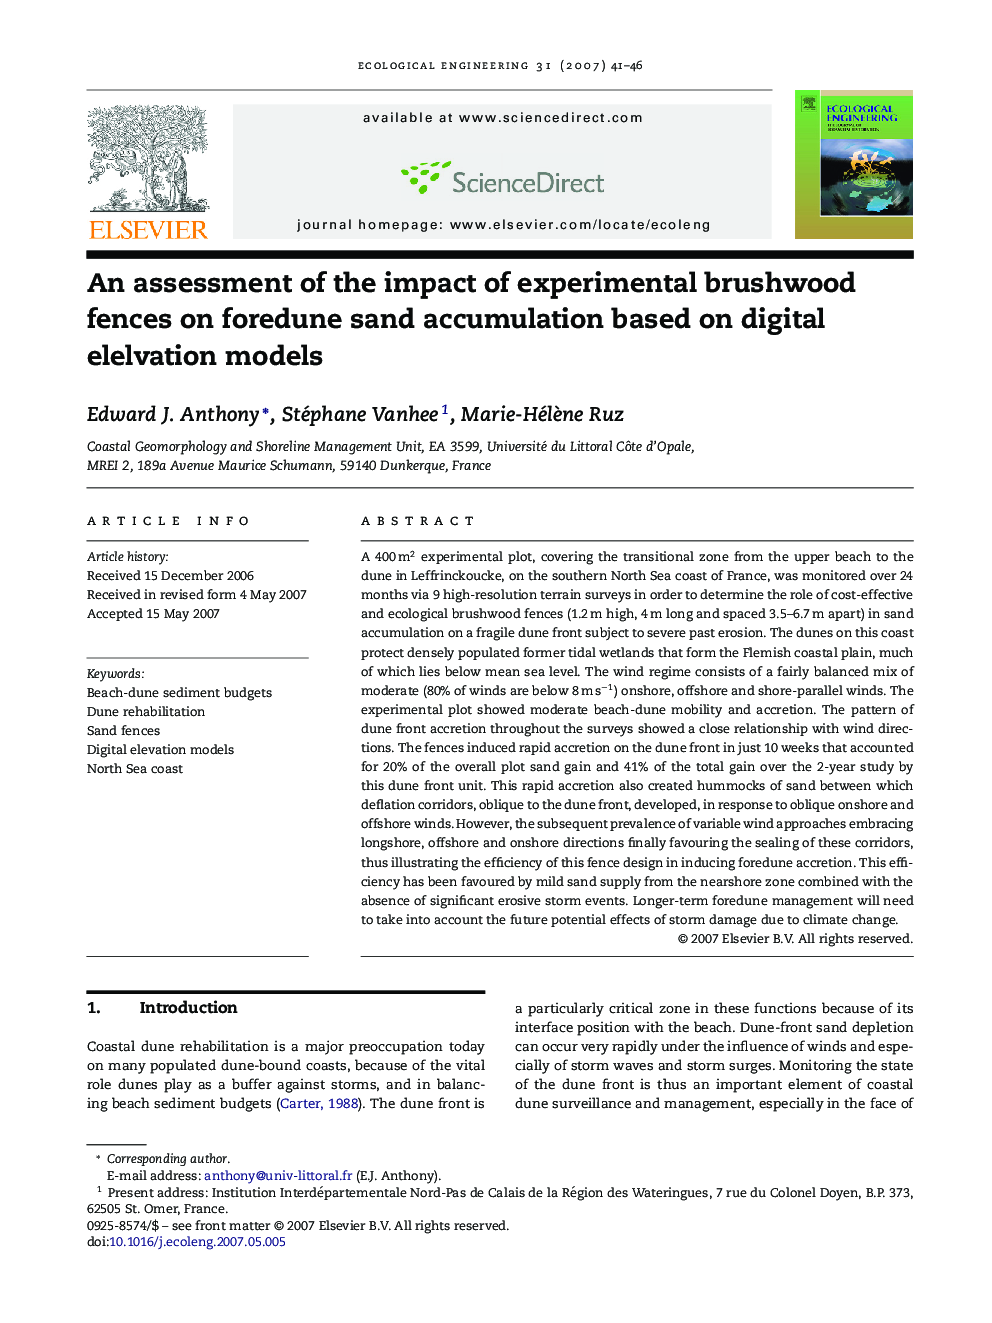 An assessment of the impact of experimental brushwood fences on foredune sand accumulation based on digital elelvation models